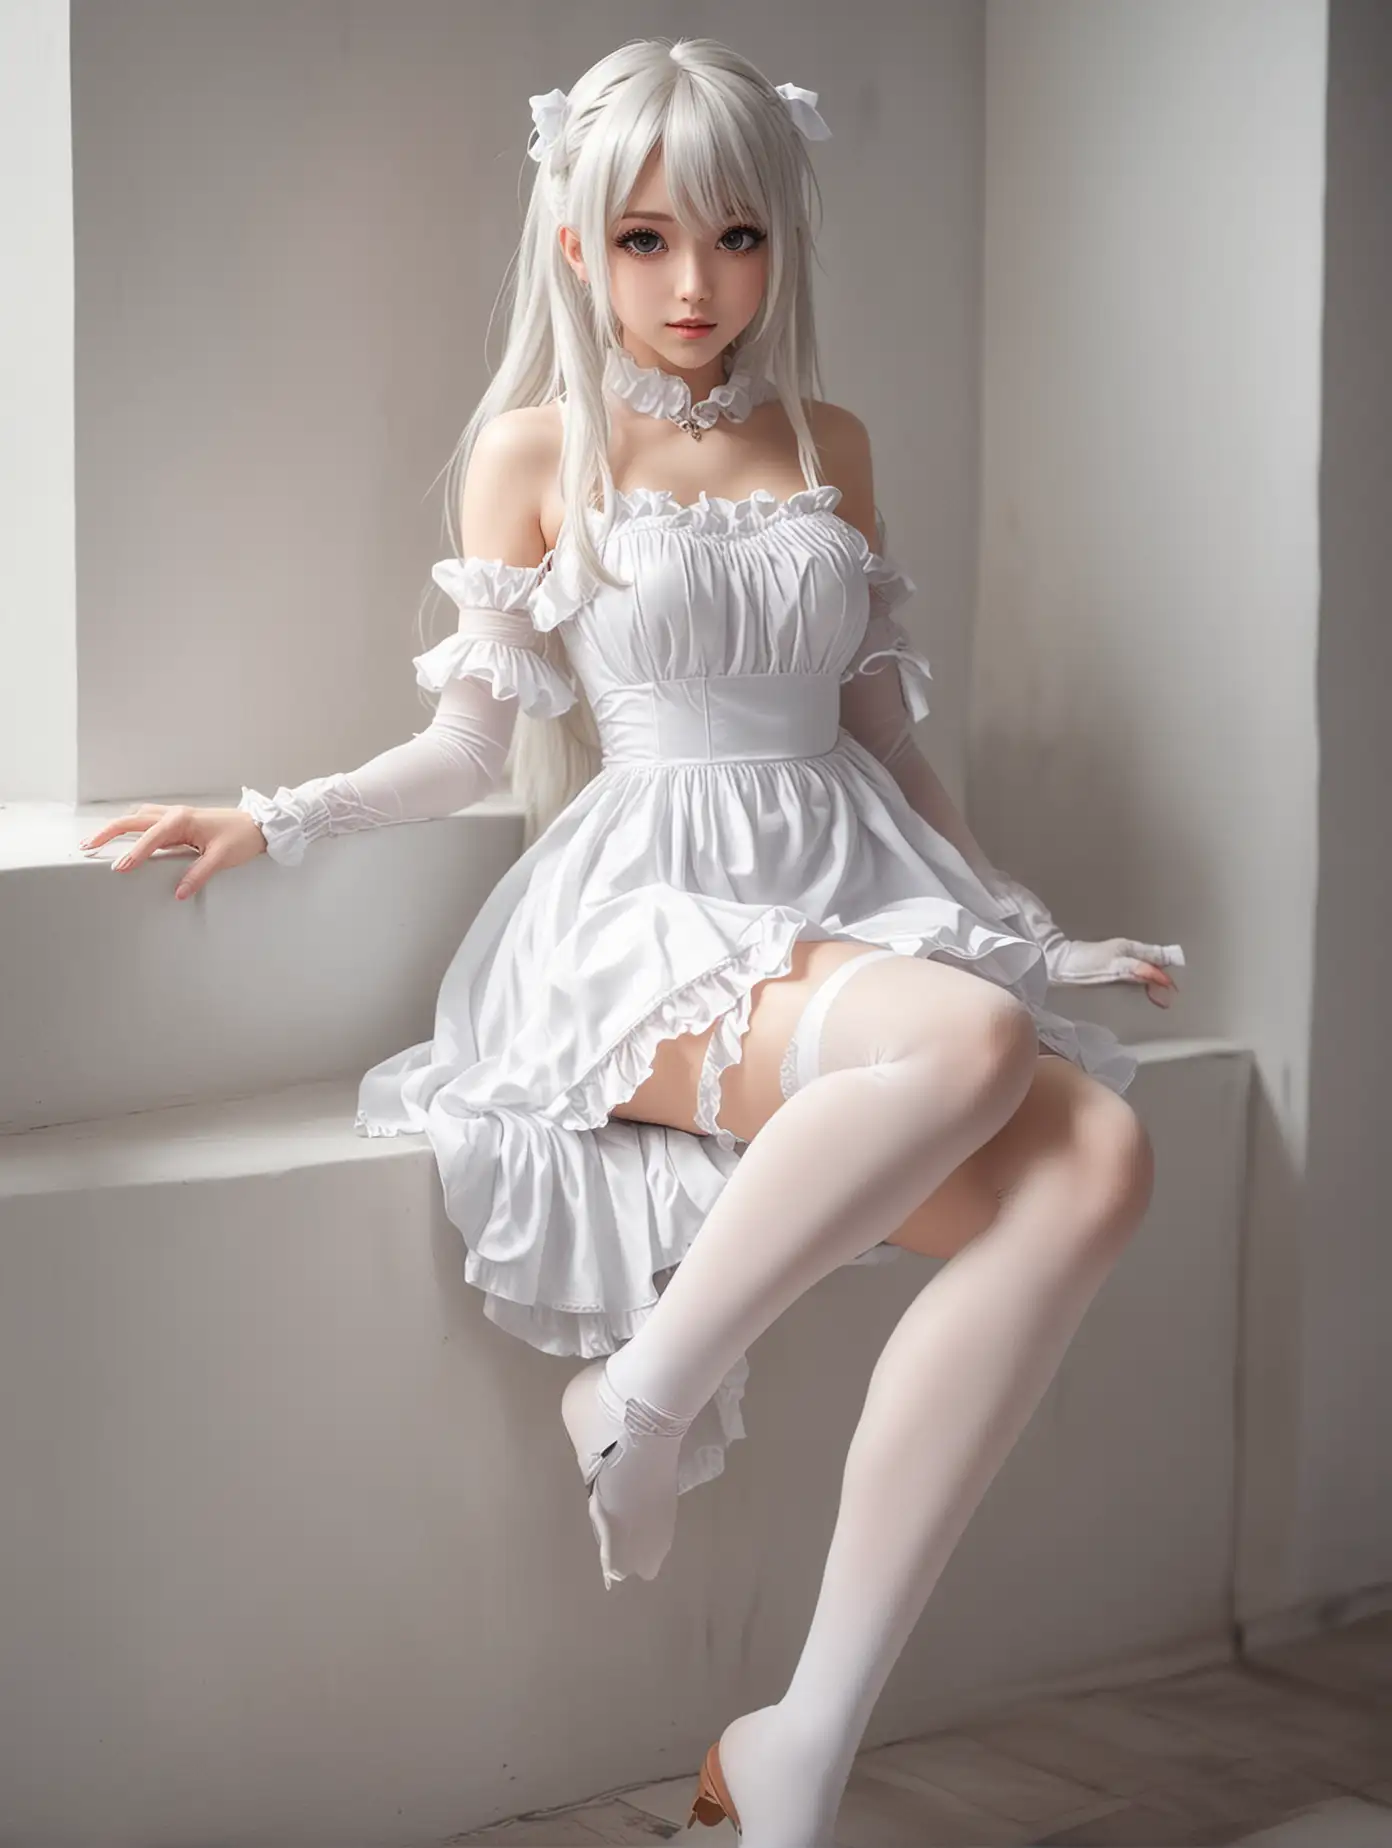 sexy anime style girl, white dress with white stockings